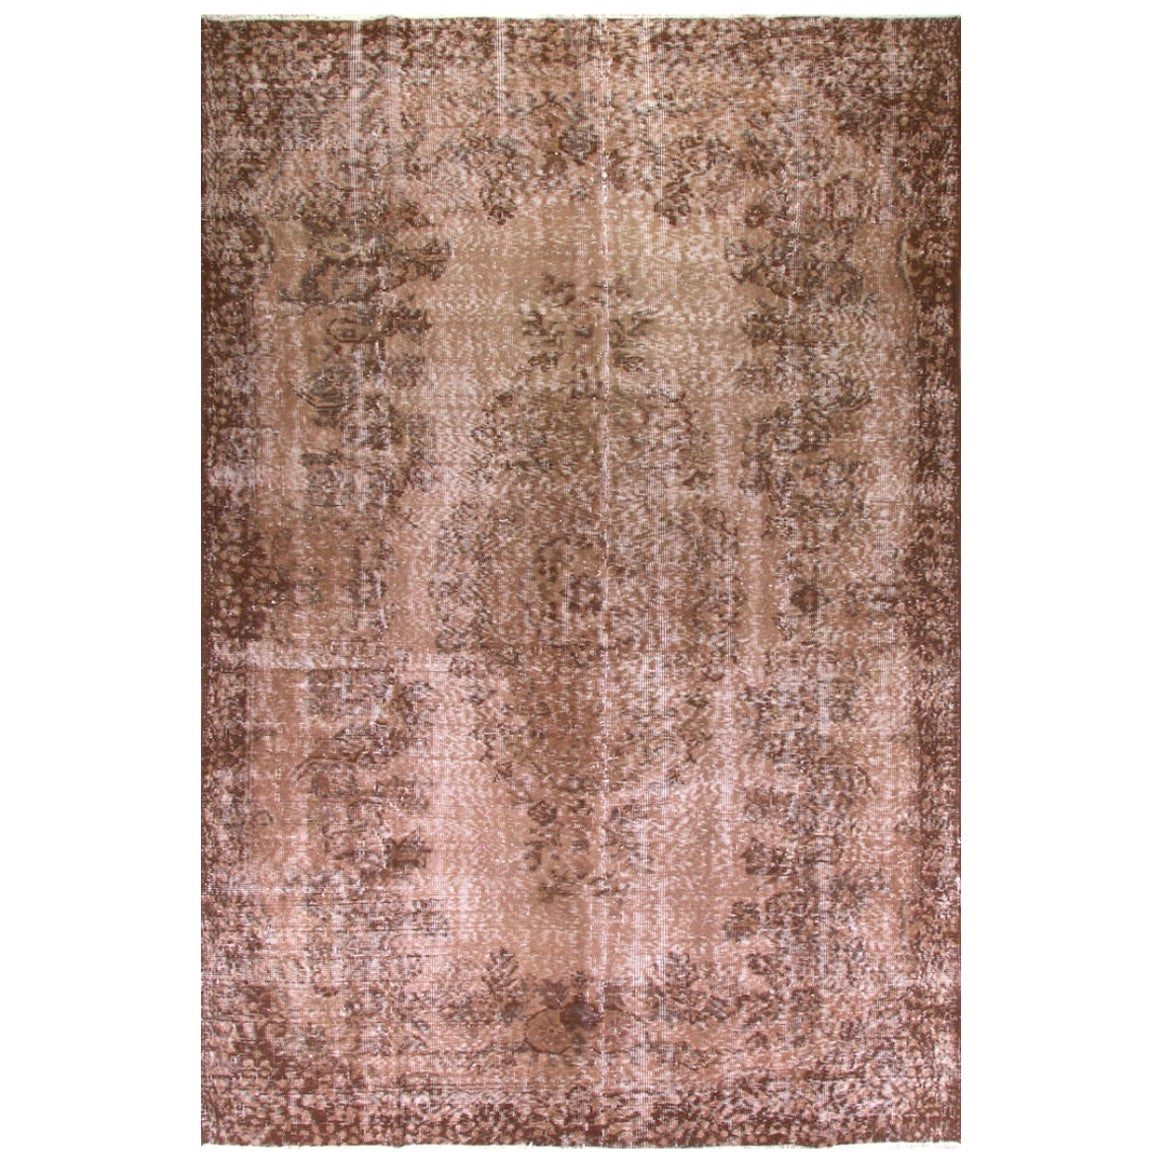 5.5x8.2 ft Brown Handmade Turkish Area Rug, Midcentury Baroque Design Carpet For Sale